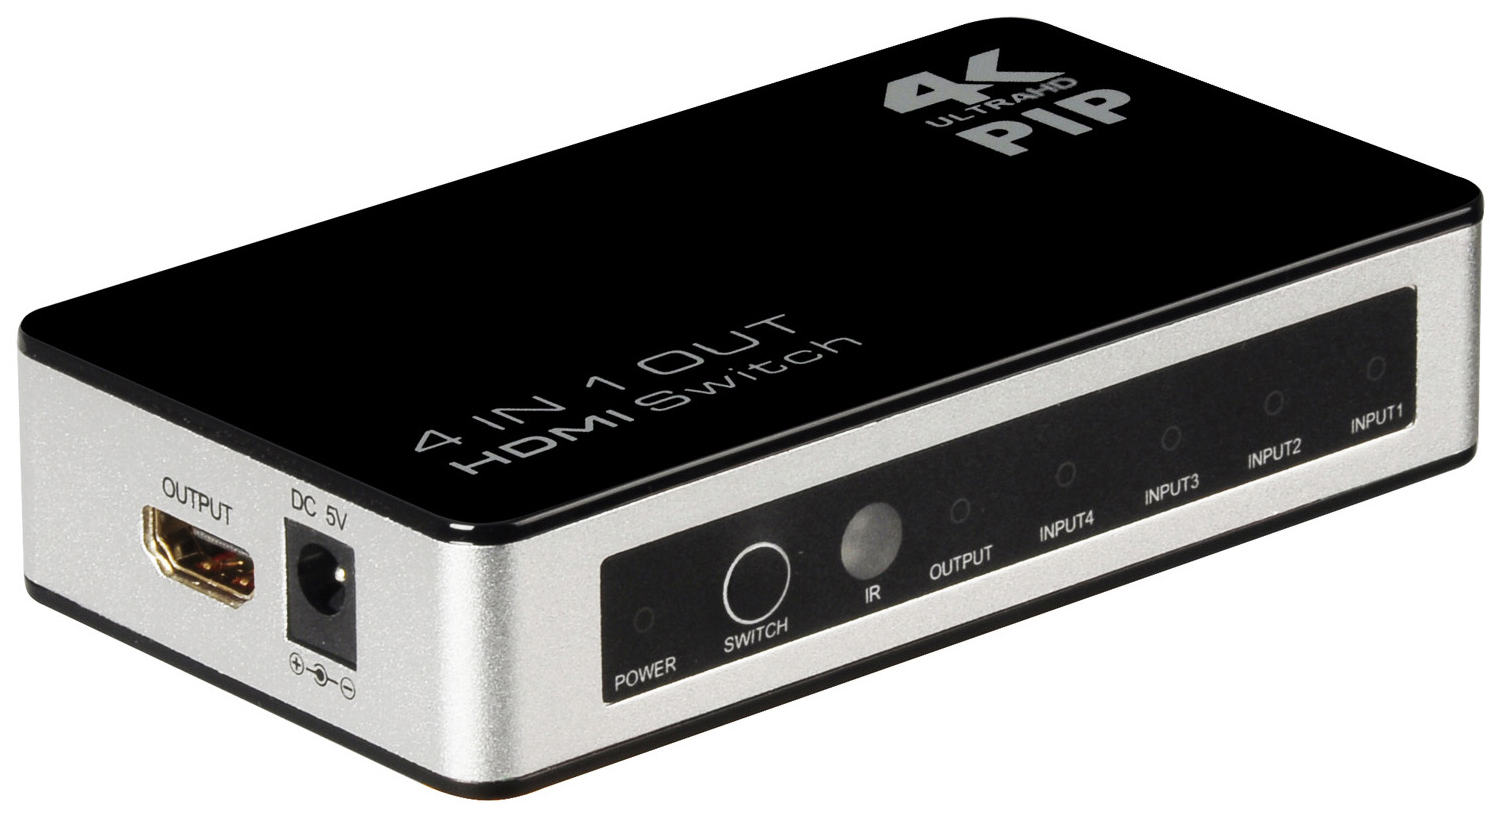 Переключатель HDMI 1.4 4x1 4K 30Hz для Smart TV PS3 PS4 + PIP, пульт ДУ (GL-VK41P), черный, 4x1+PIPм